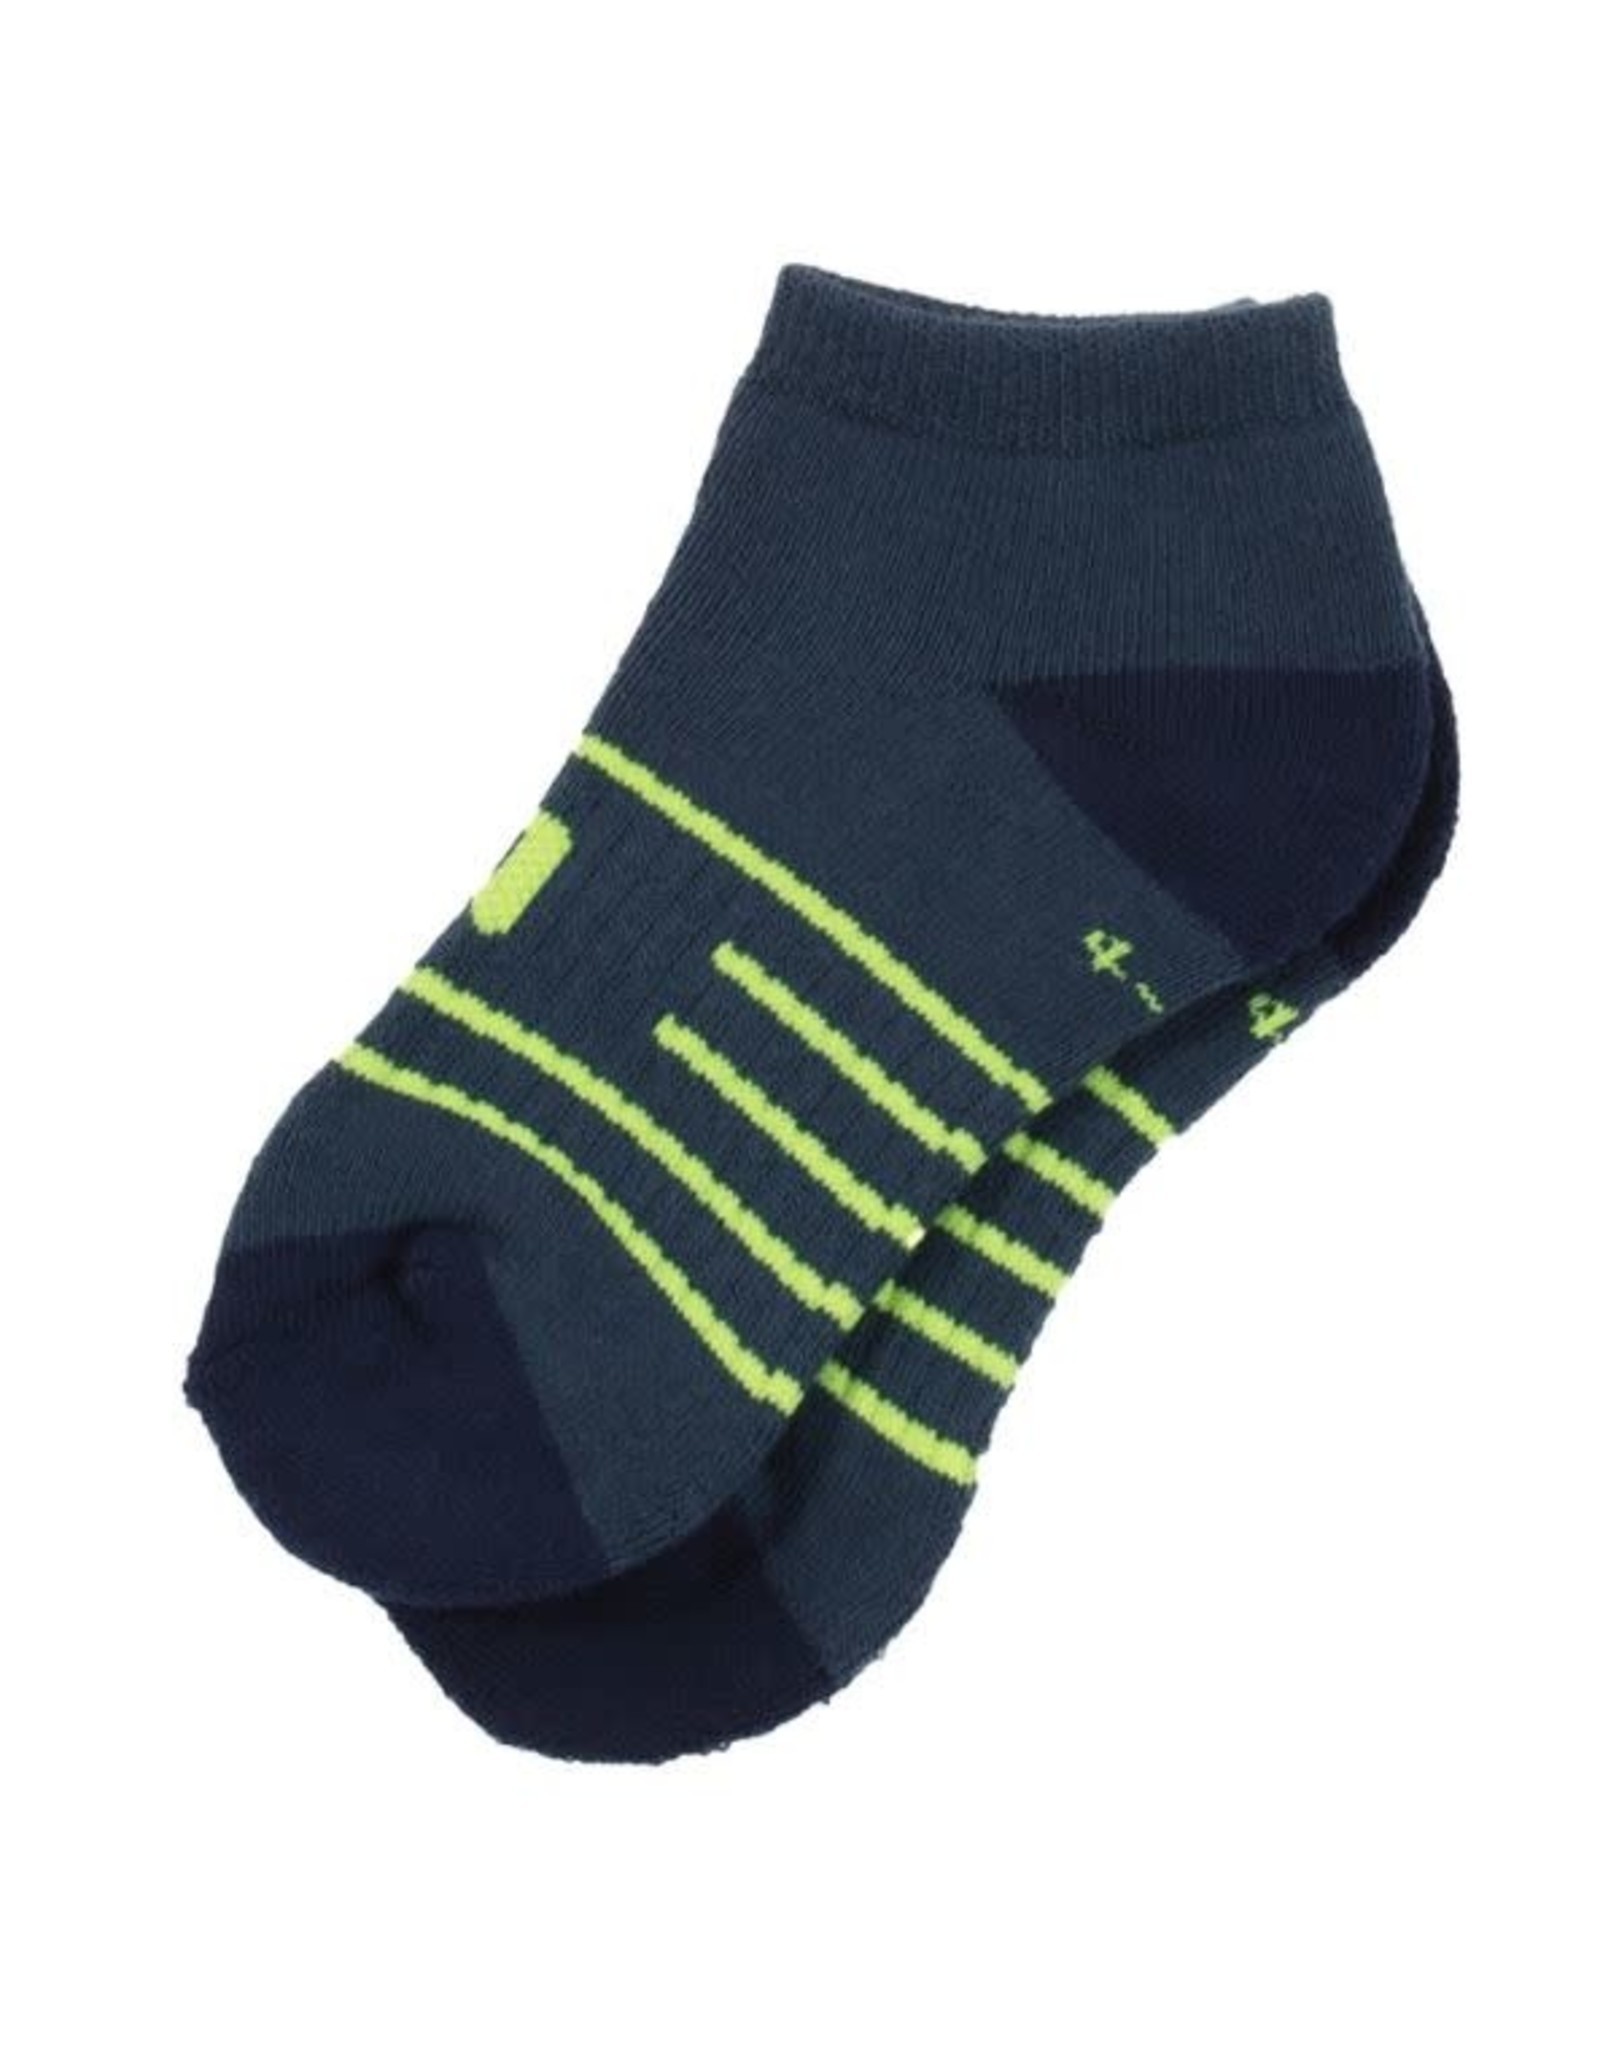 Noruk Navy Turquoise Athletic Sock